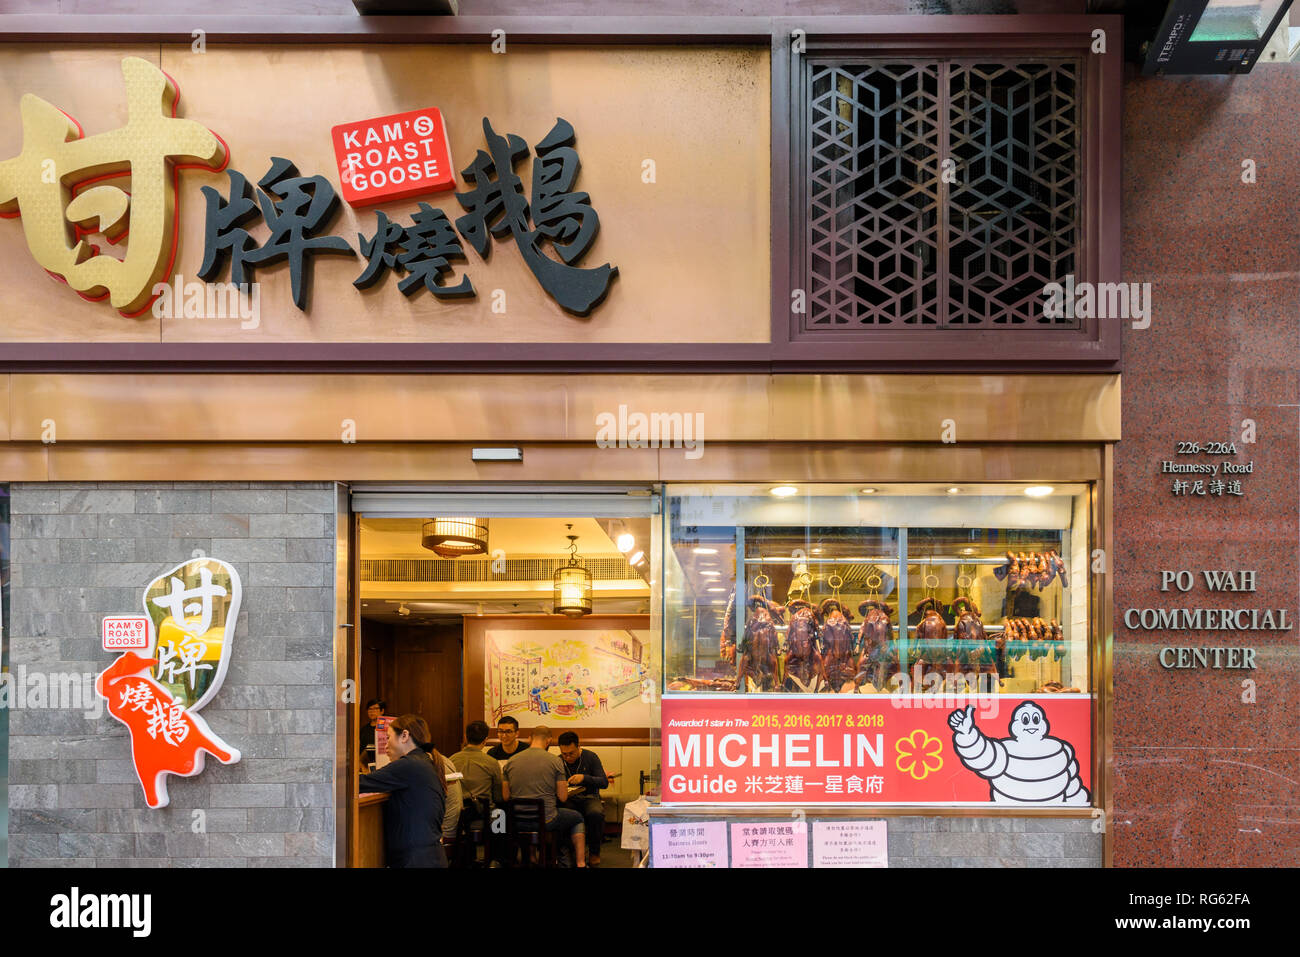 Fassade des beliebten Michelin Stern's Restaurant kam Gänsebraten, Hennessy Road, Wan Chai, Hong Kong Stockfoto